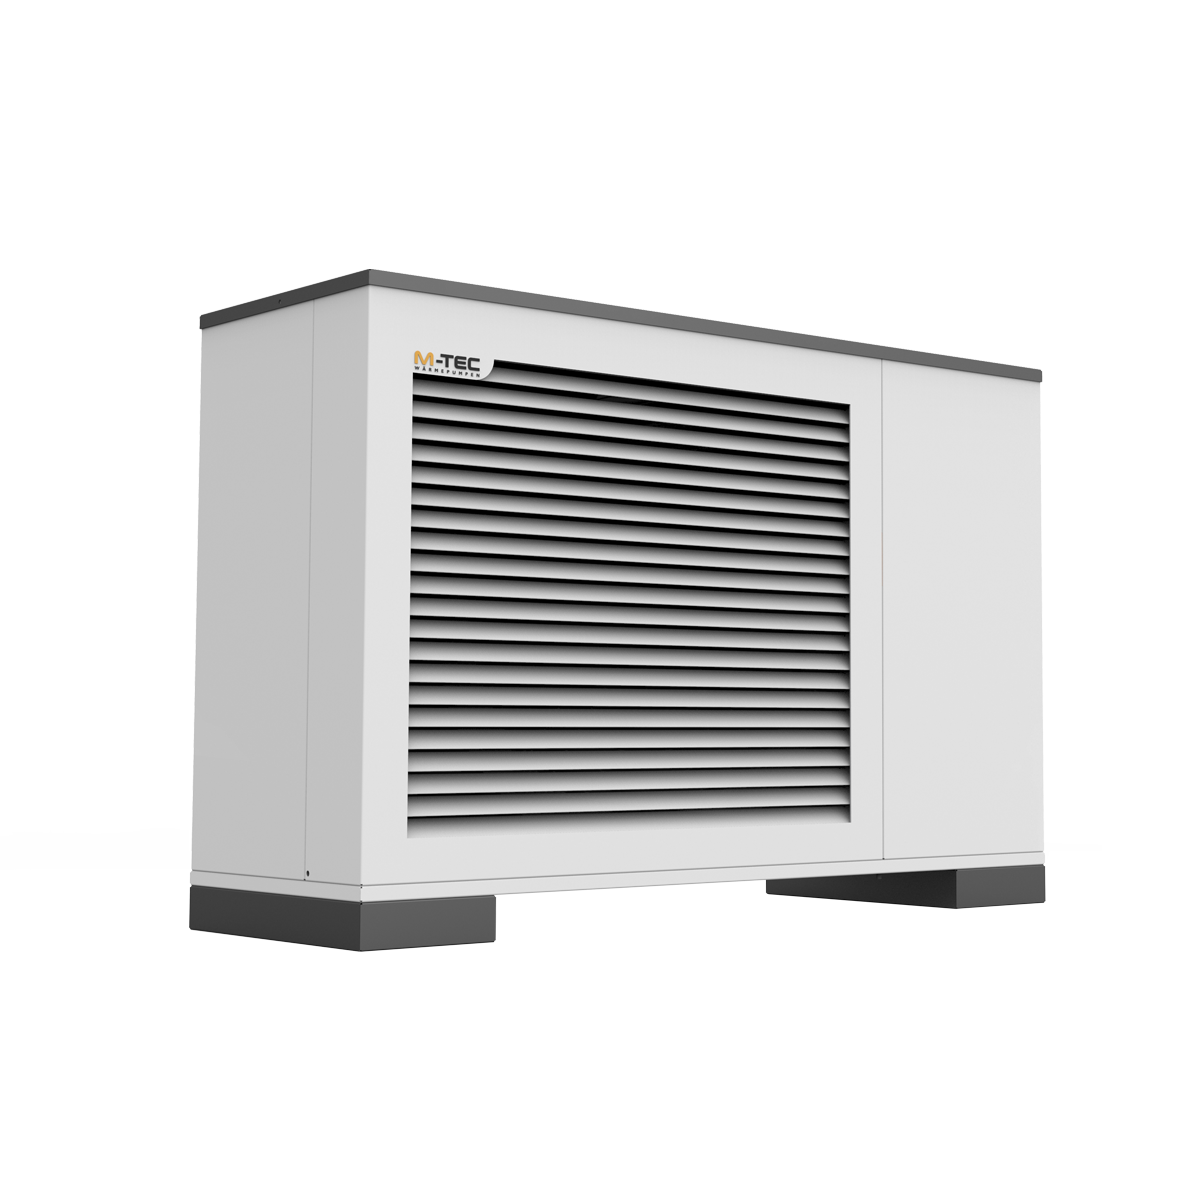 M-Tec Luft-Wärmepumpe Monoblock